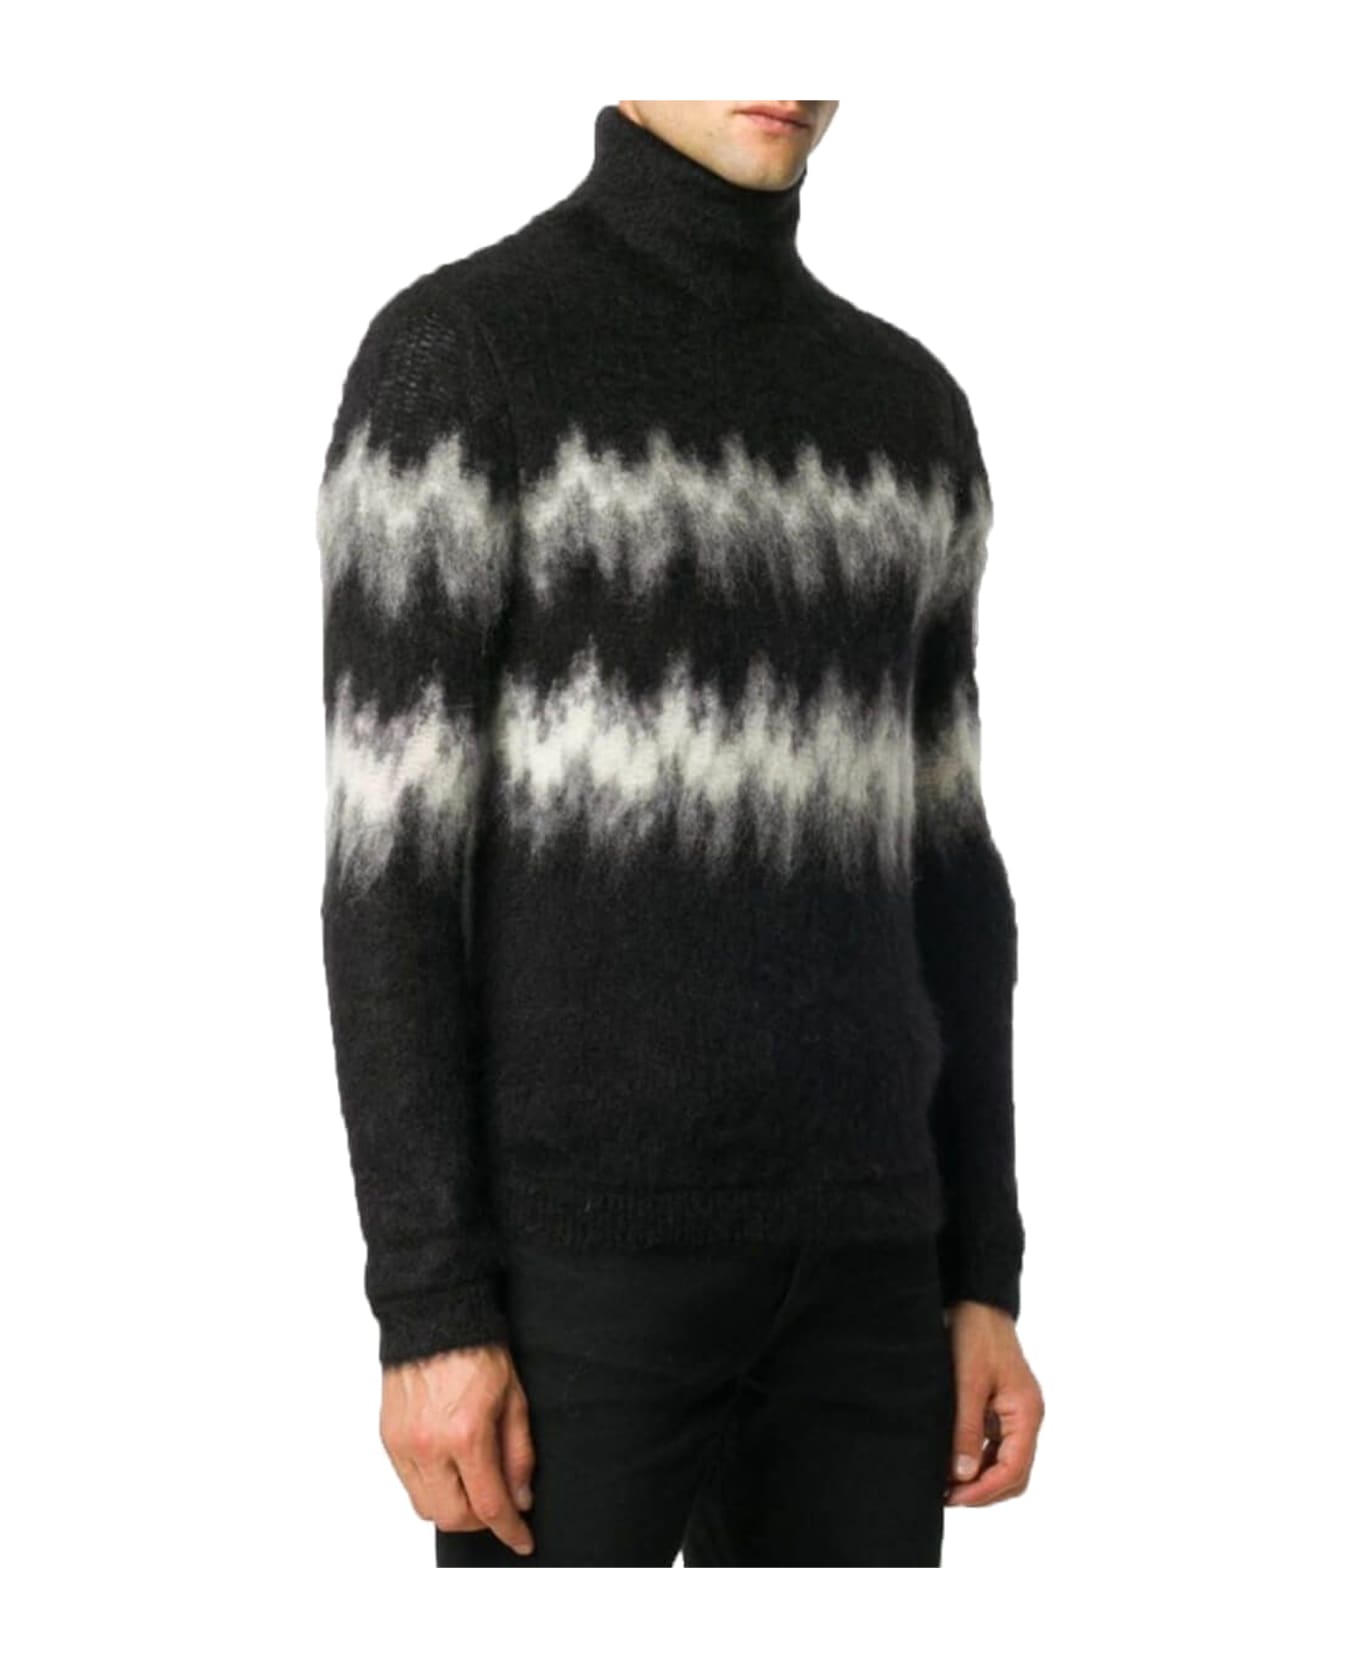 Saint Laurent Turtleneck Sweater - Black